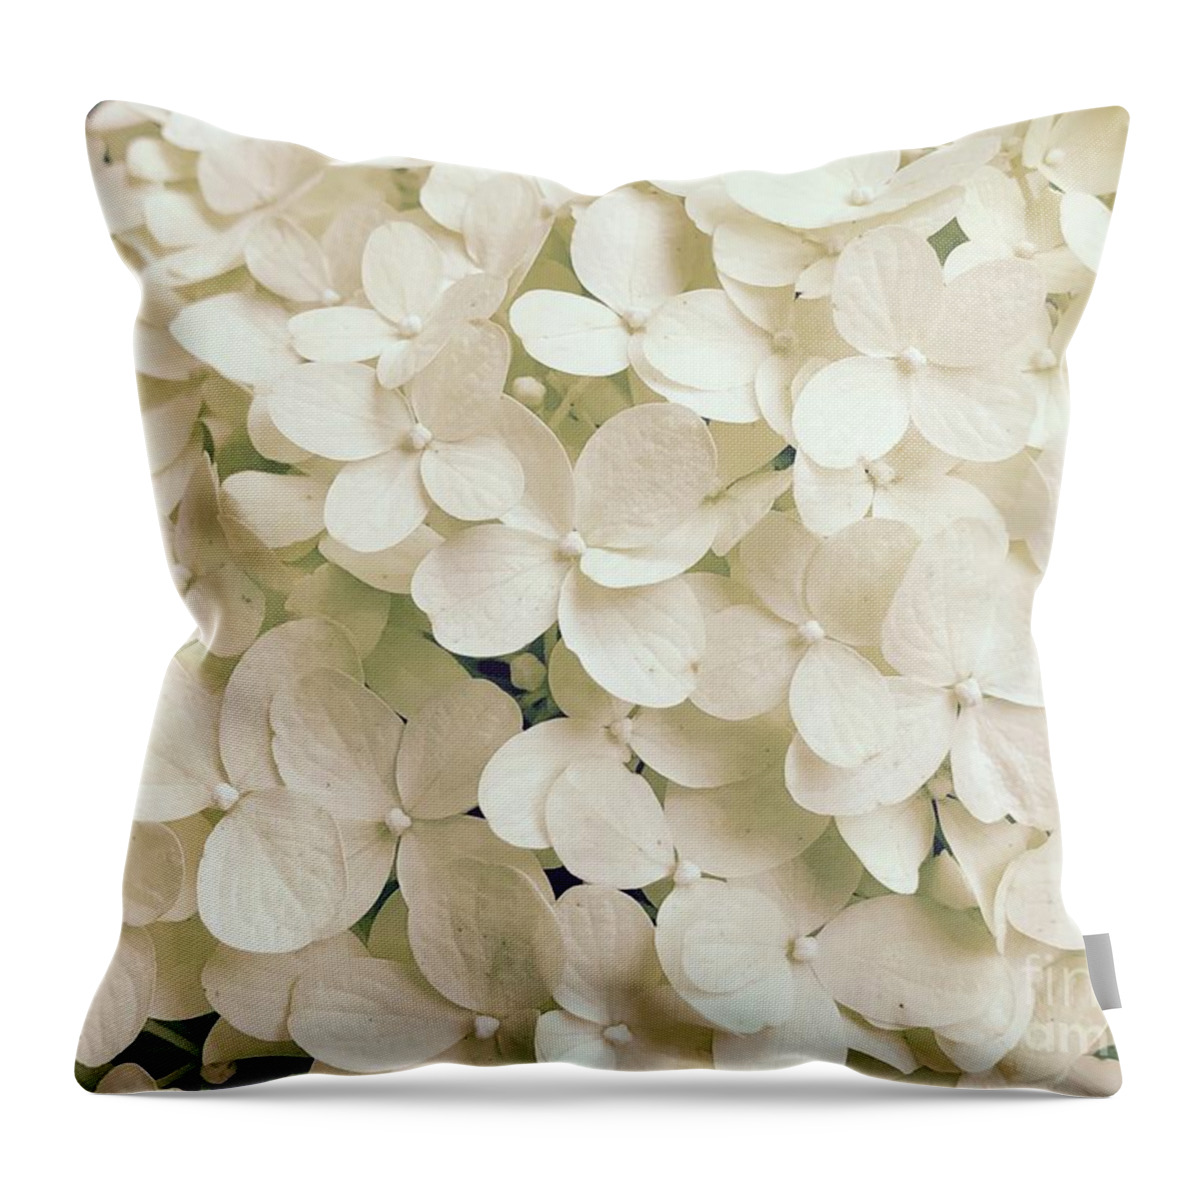 Creamy Hydrangea Bloom Throw Pillow featuring the photograph Creamy Hydrangea Bloom by Carol Riddle